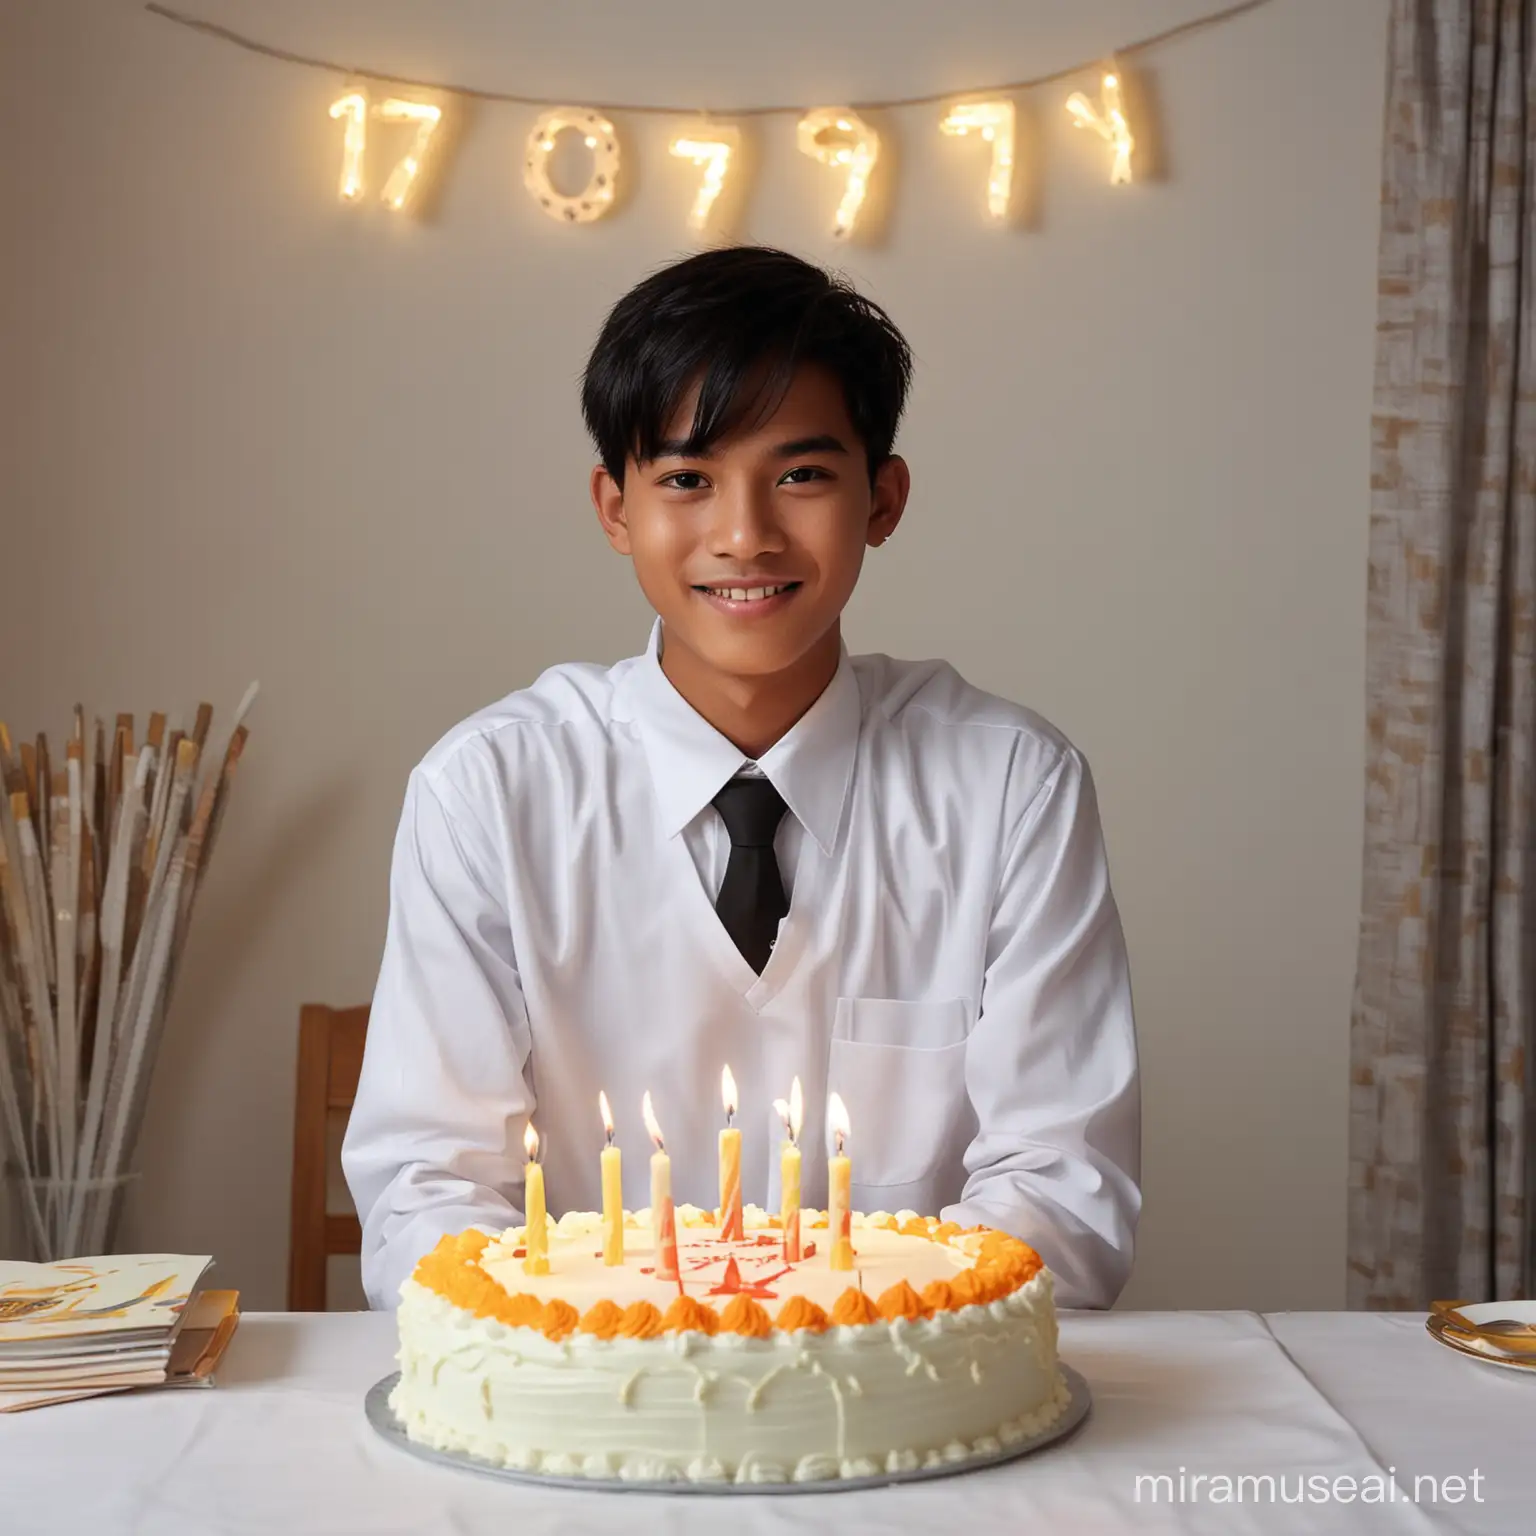 Seni fotografi, seorang laki-laki Indonesia usia 17 taun, berambut pendek lurus rapih, memakai seragam sekolah putih, sedang duduk di sebuah ruangan dengan dekorasi ulang tahun, di meja terdapat kue ulang tahun dengan lilin angka 17, ekspresi wajah ceria, cinematic, UHD 